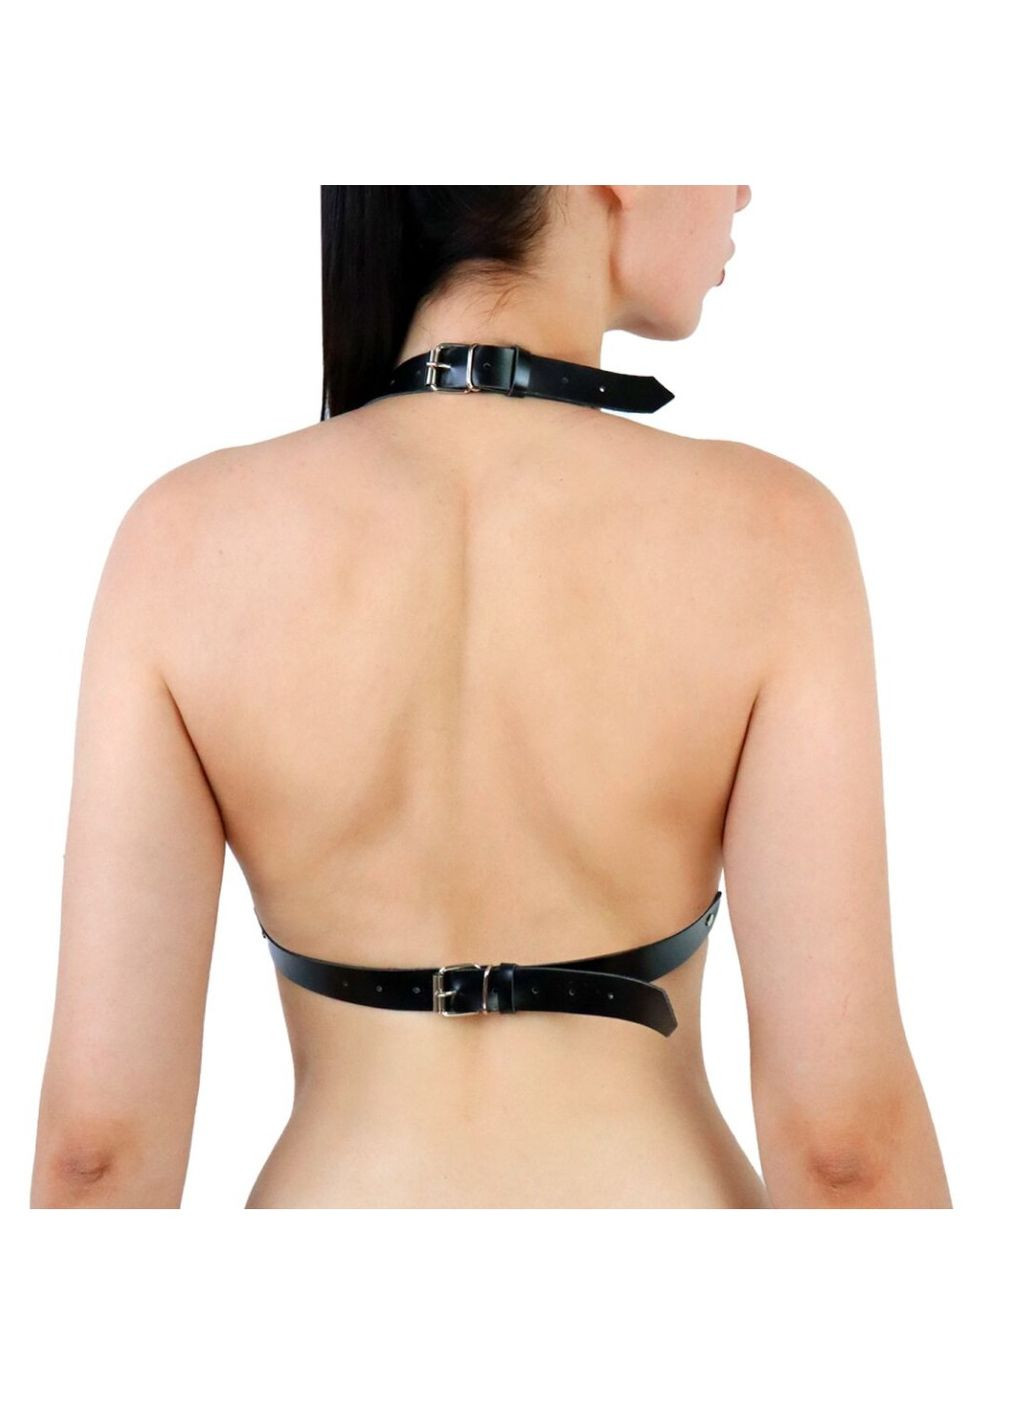 Портупея женская с шипами - Demia Leather harness, Черная XS-M Art of Sex (276776210)